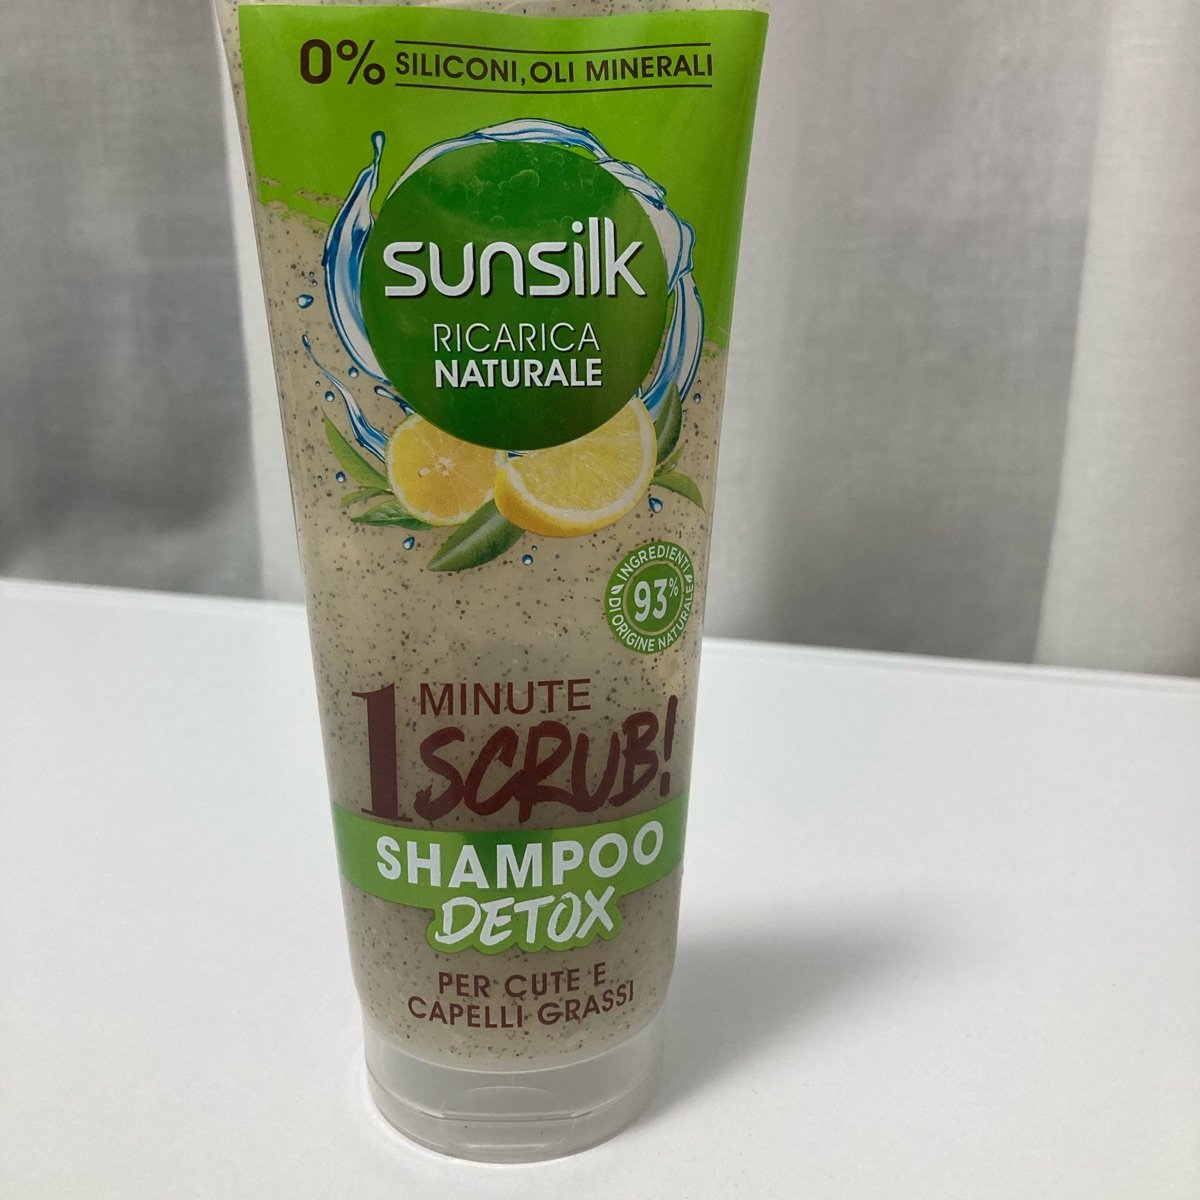 Sunsilk 1 Minute Scrub Shampoo Detox Per Cute e Capelli Grassi Reviews |  abillion